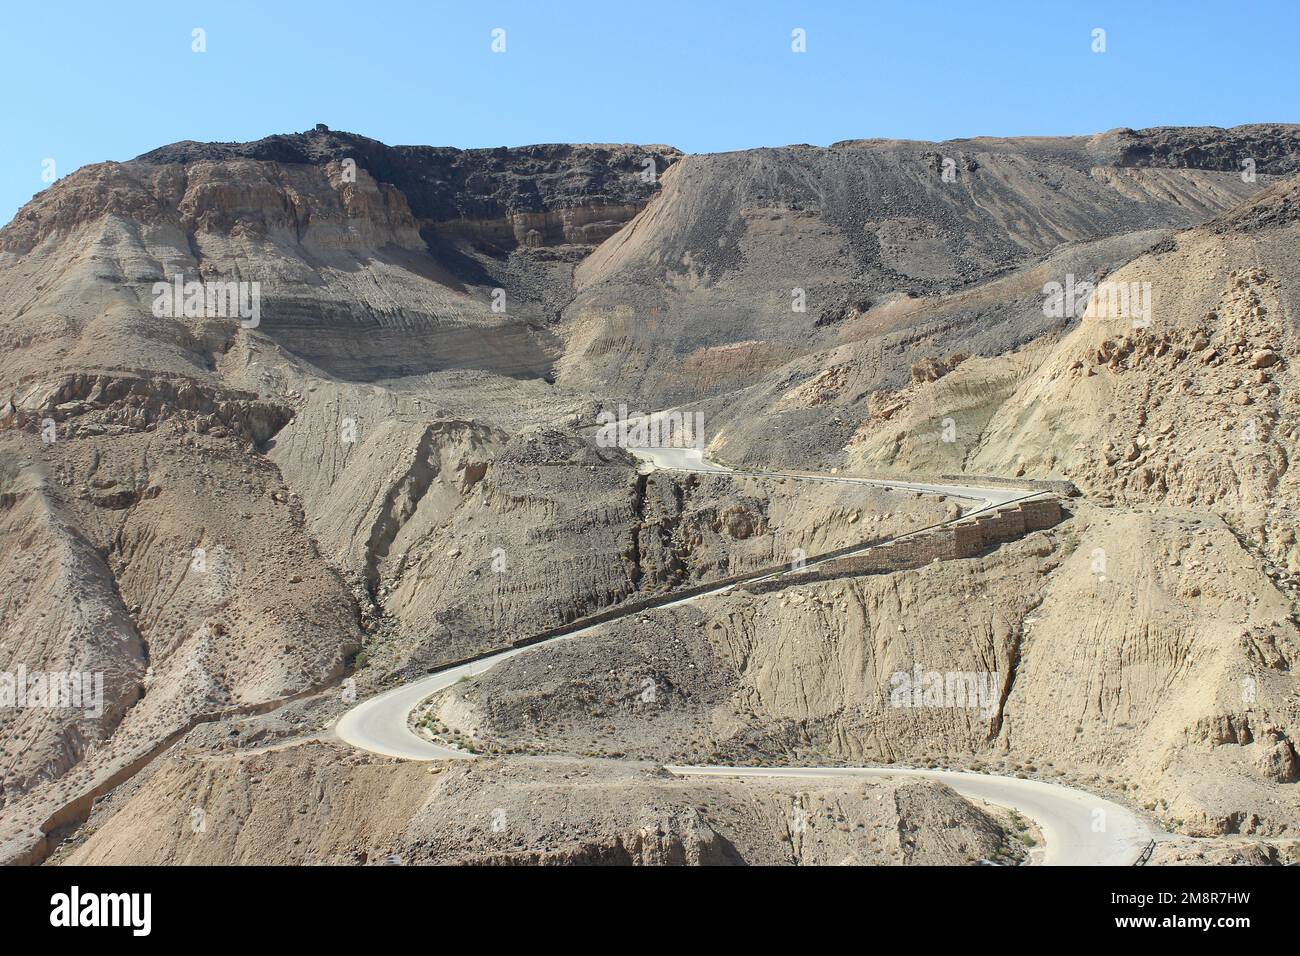 Jordan - winding desert road of the Kings Highway descending into Wadi Mujib Canyon Stock Photo